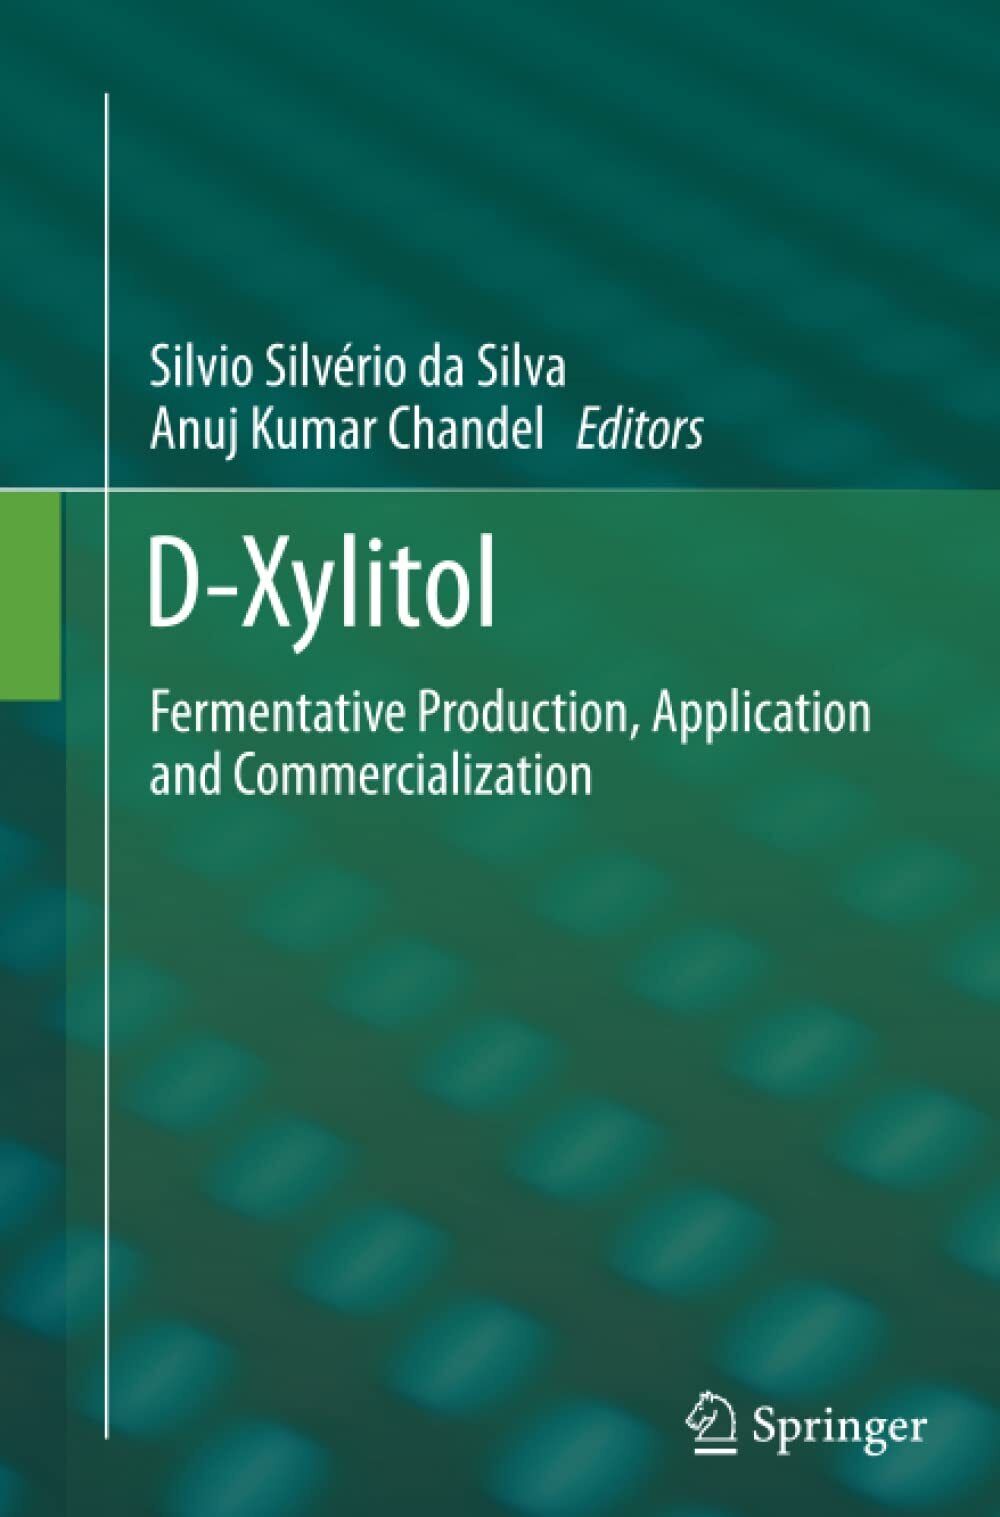 D-Xylitol - Silvio Silv?rio da Silva - Springer, 2014